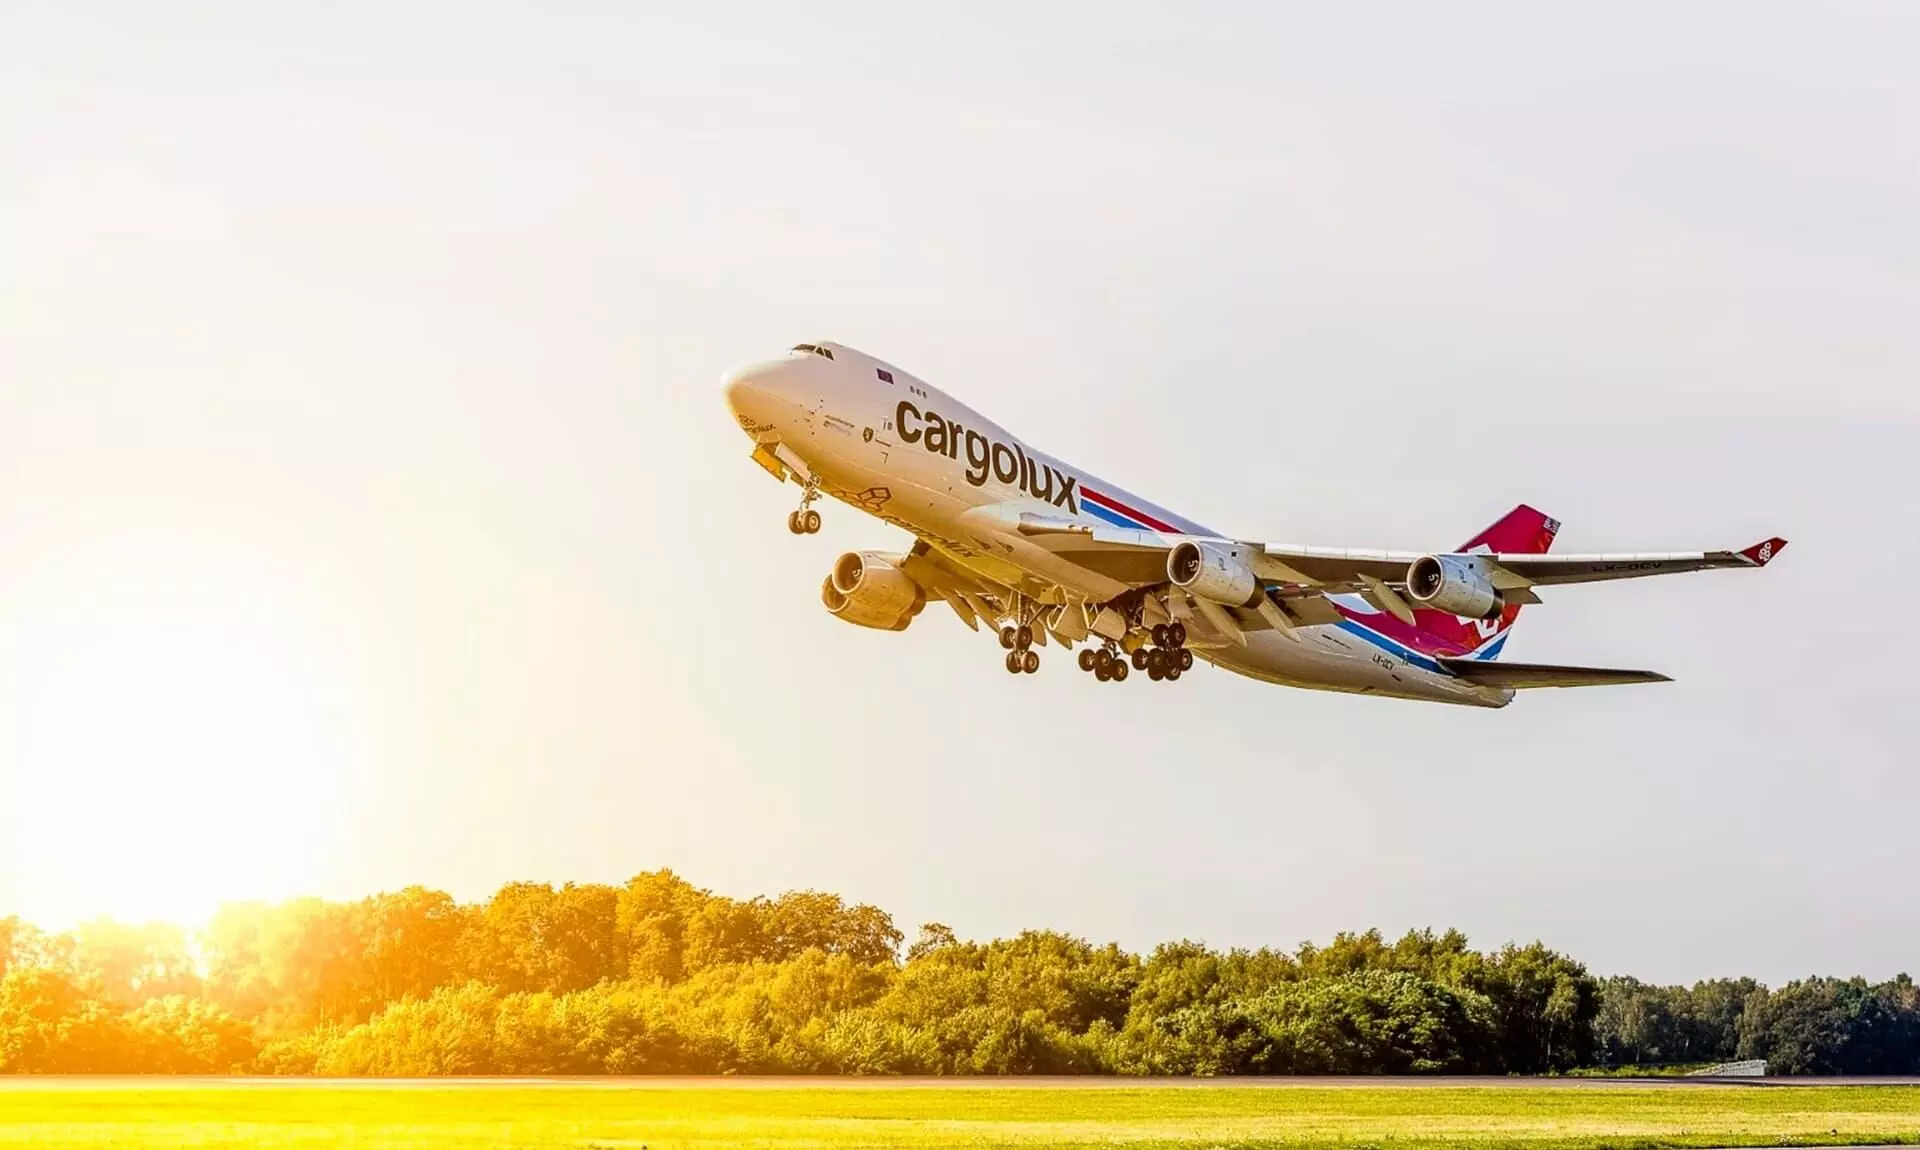 Full investigation underway at Luxembourg: Cargolux